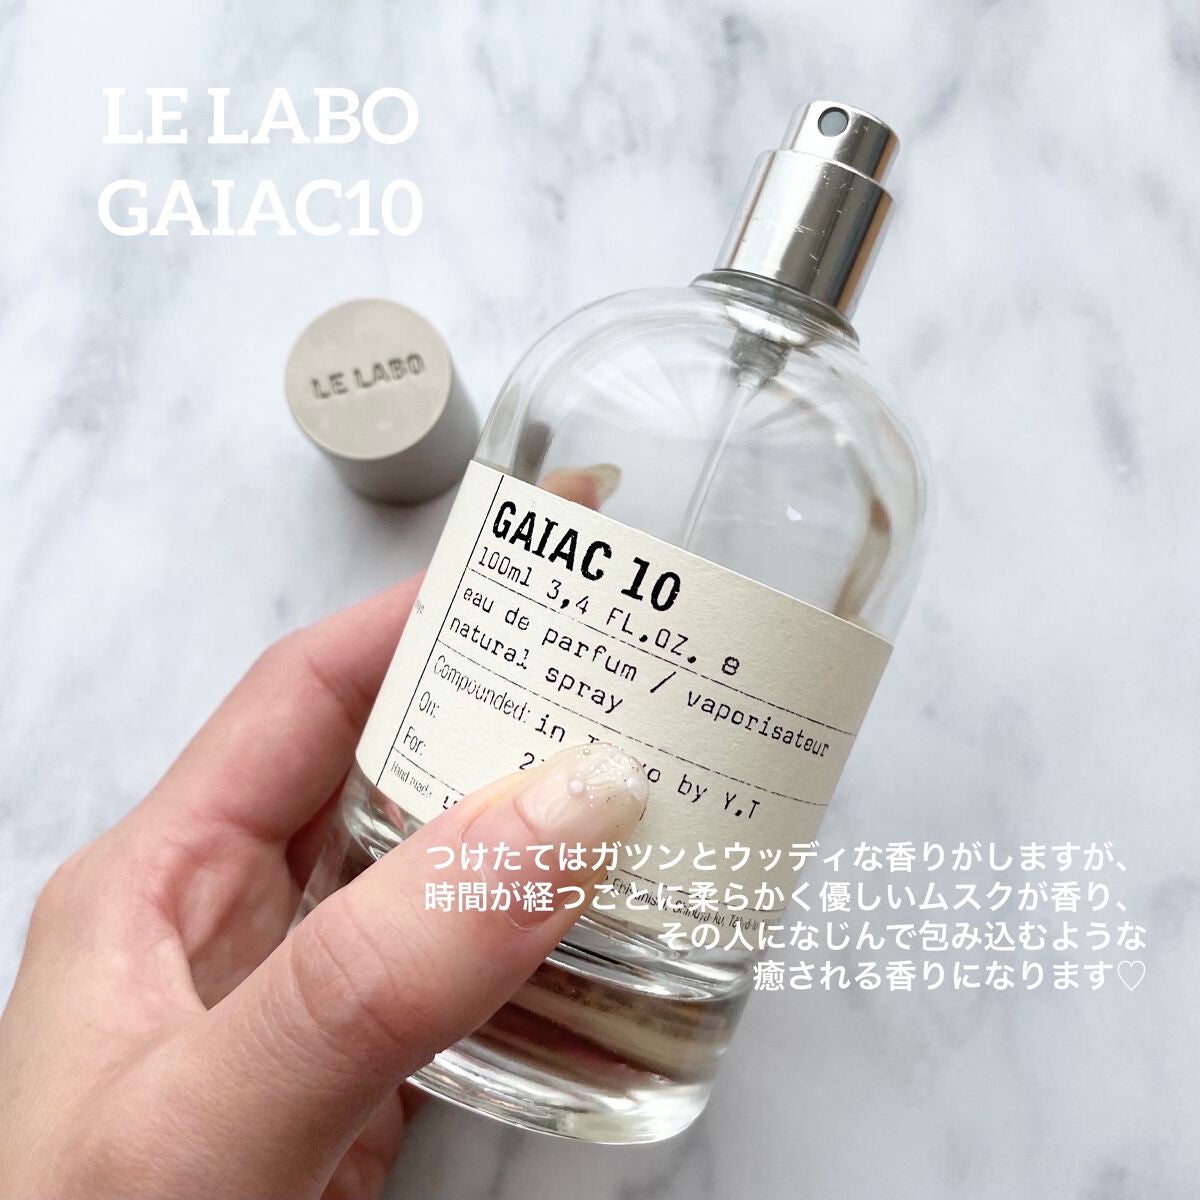 GAIAC10 Le Labo 大容量100ml 香水